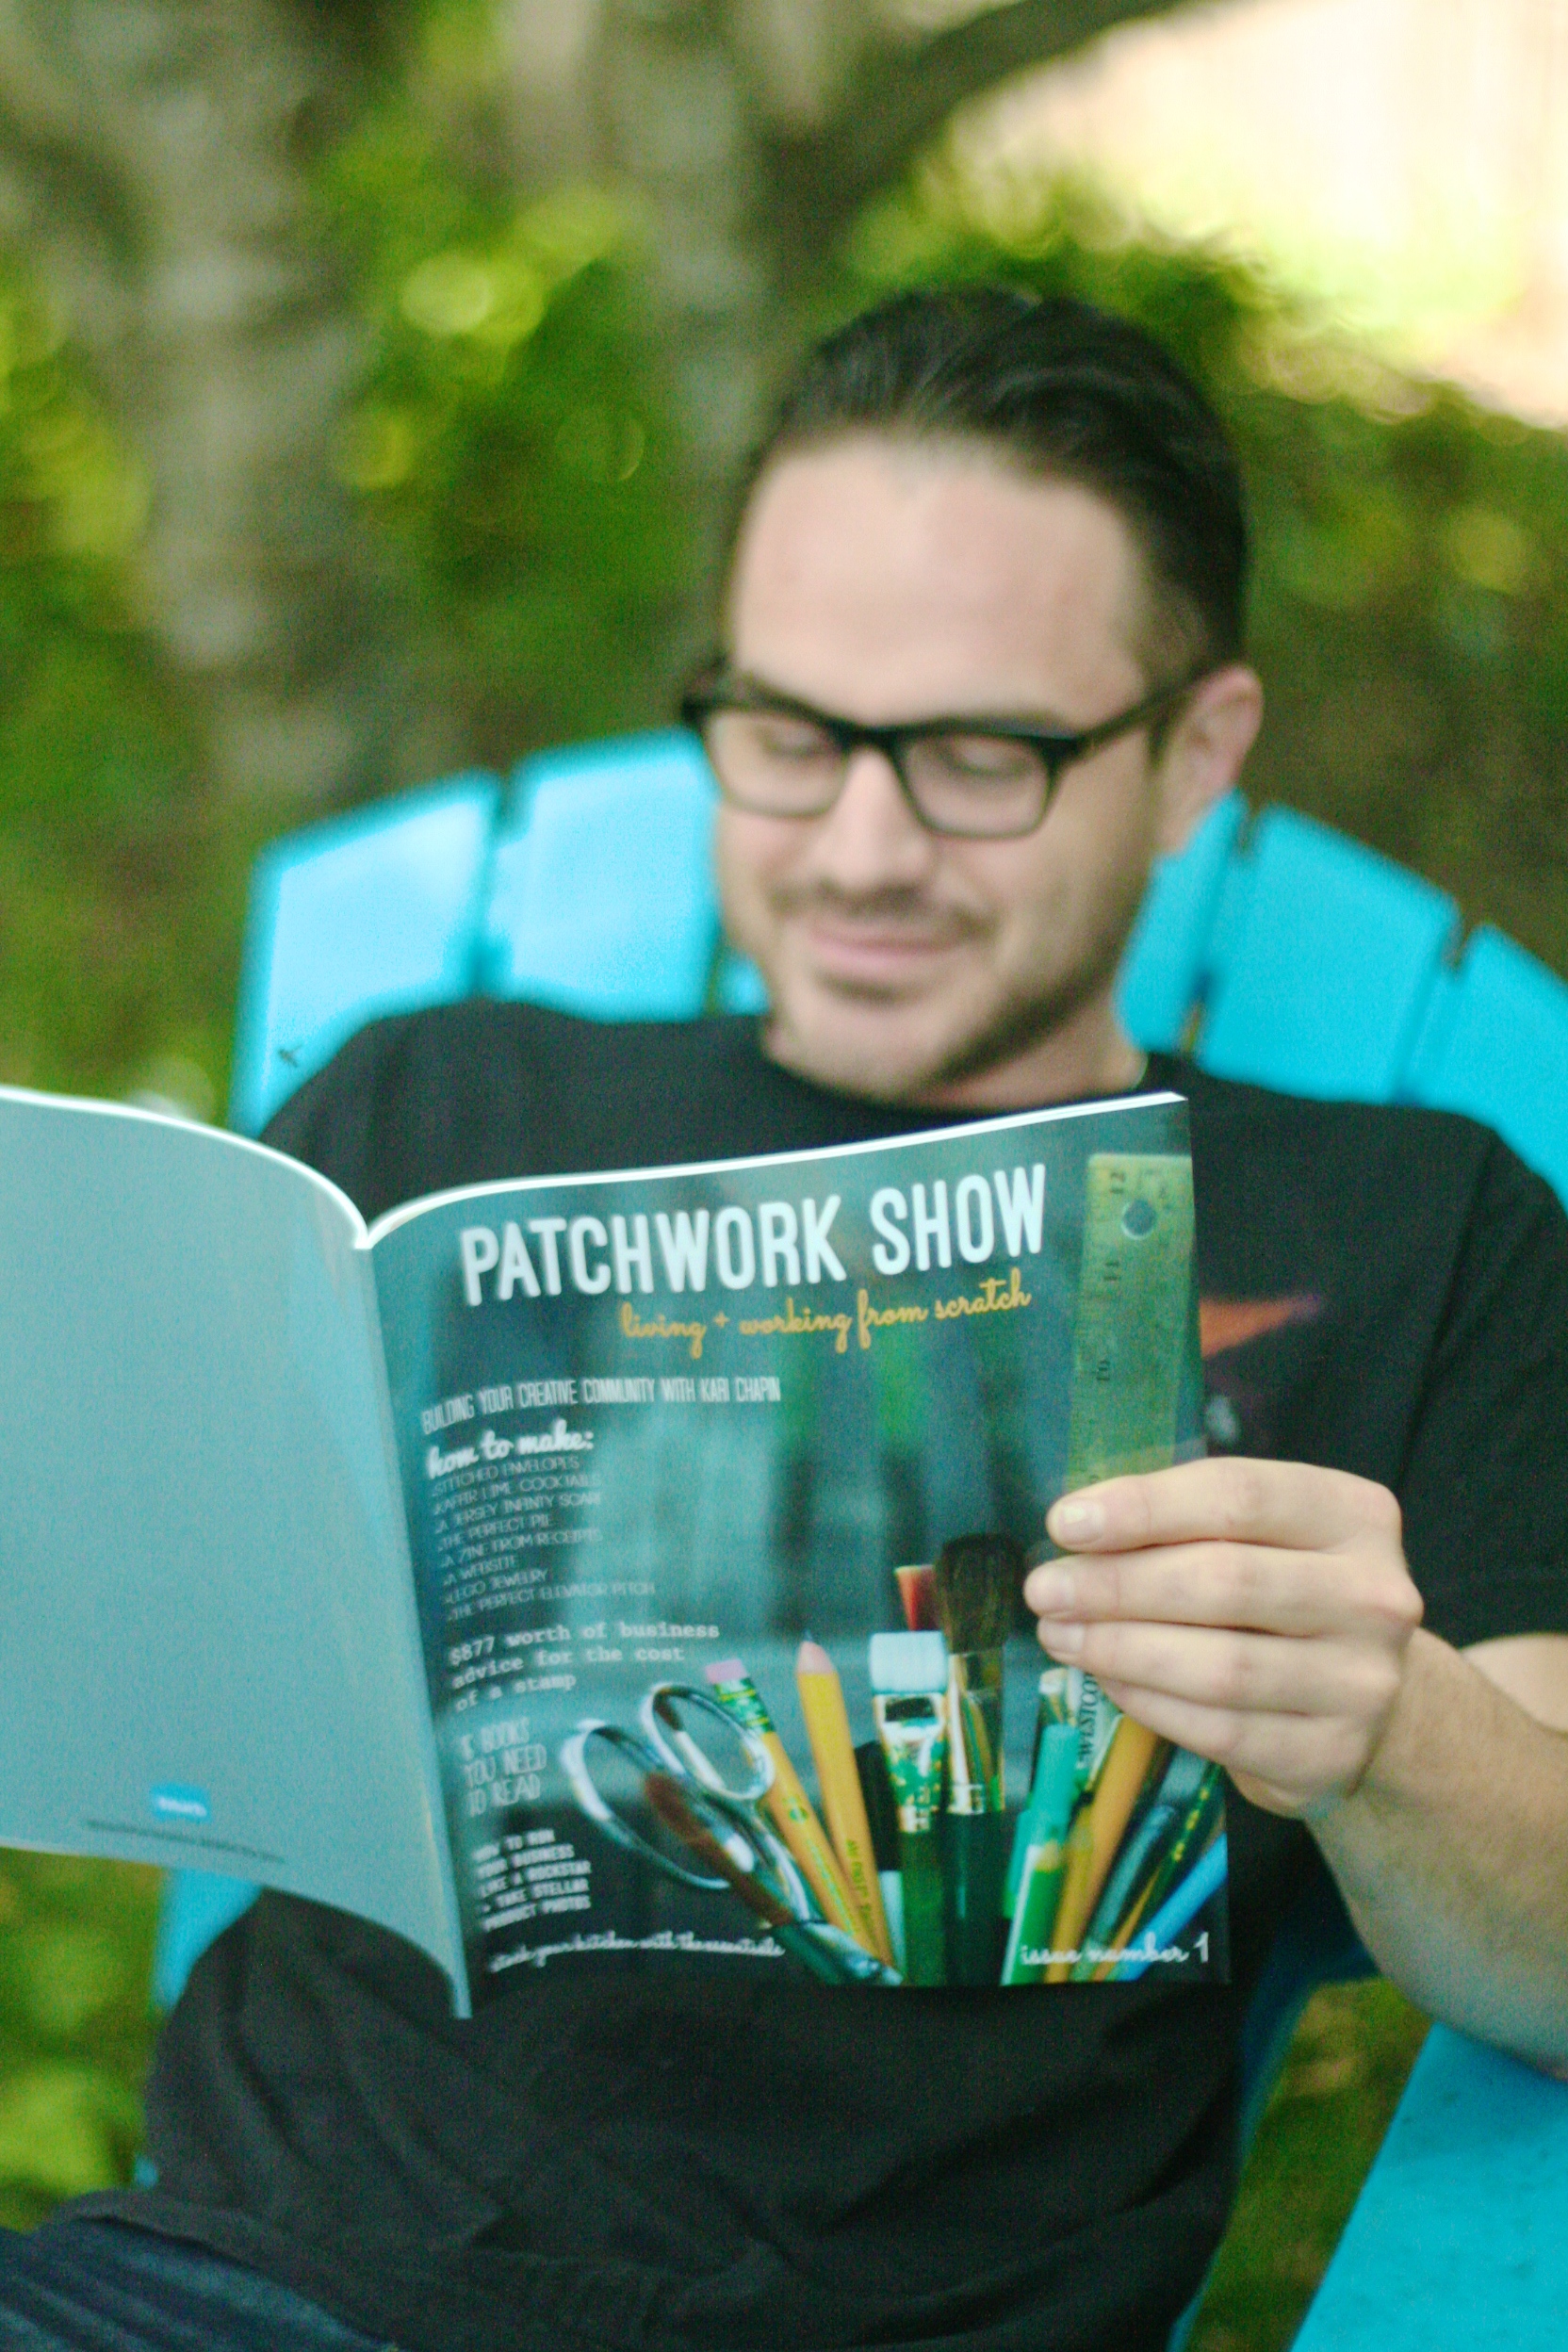 patchwork-show-magazine-indie-craft-diy-man-reading-glasses